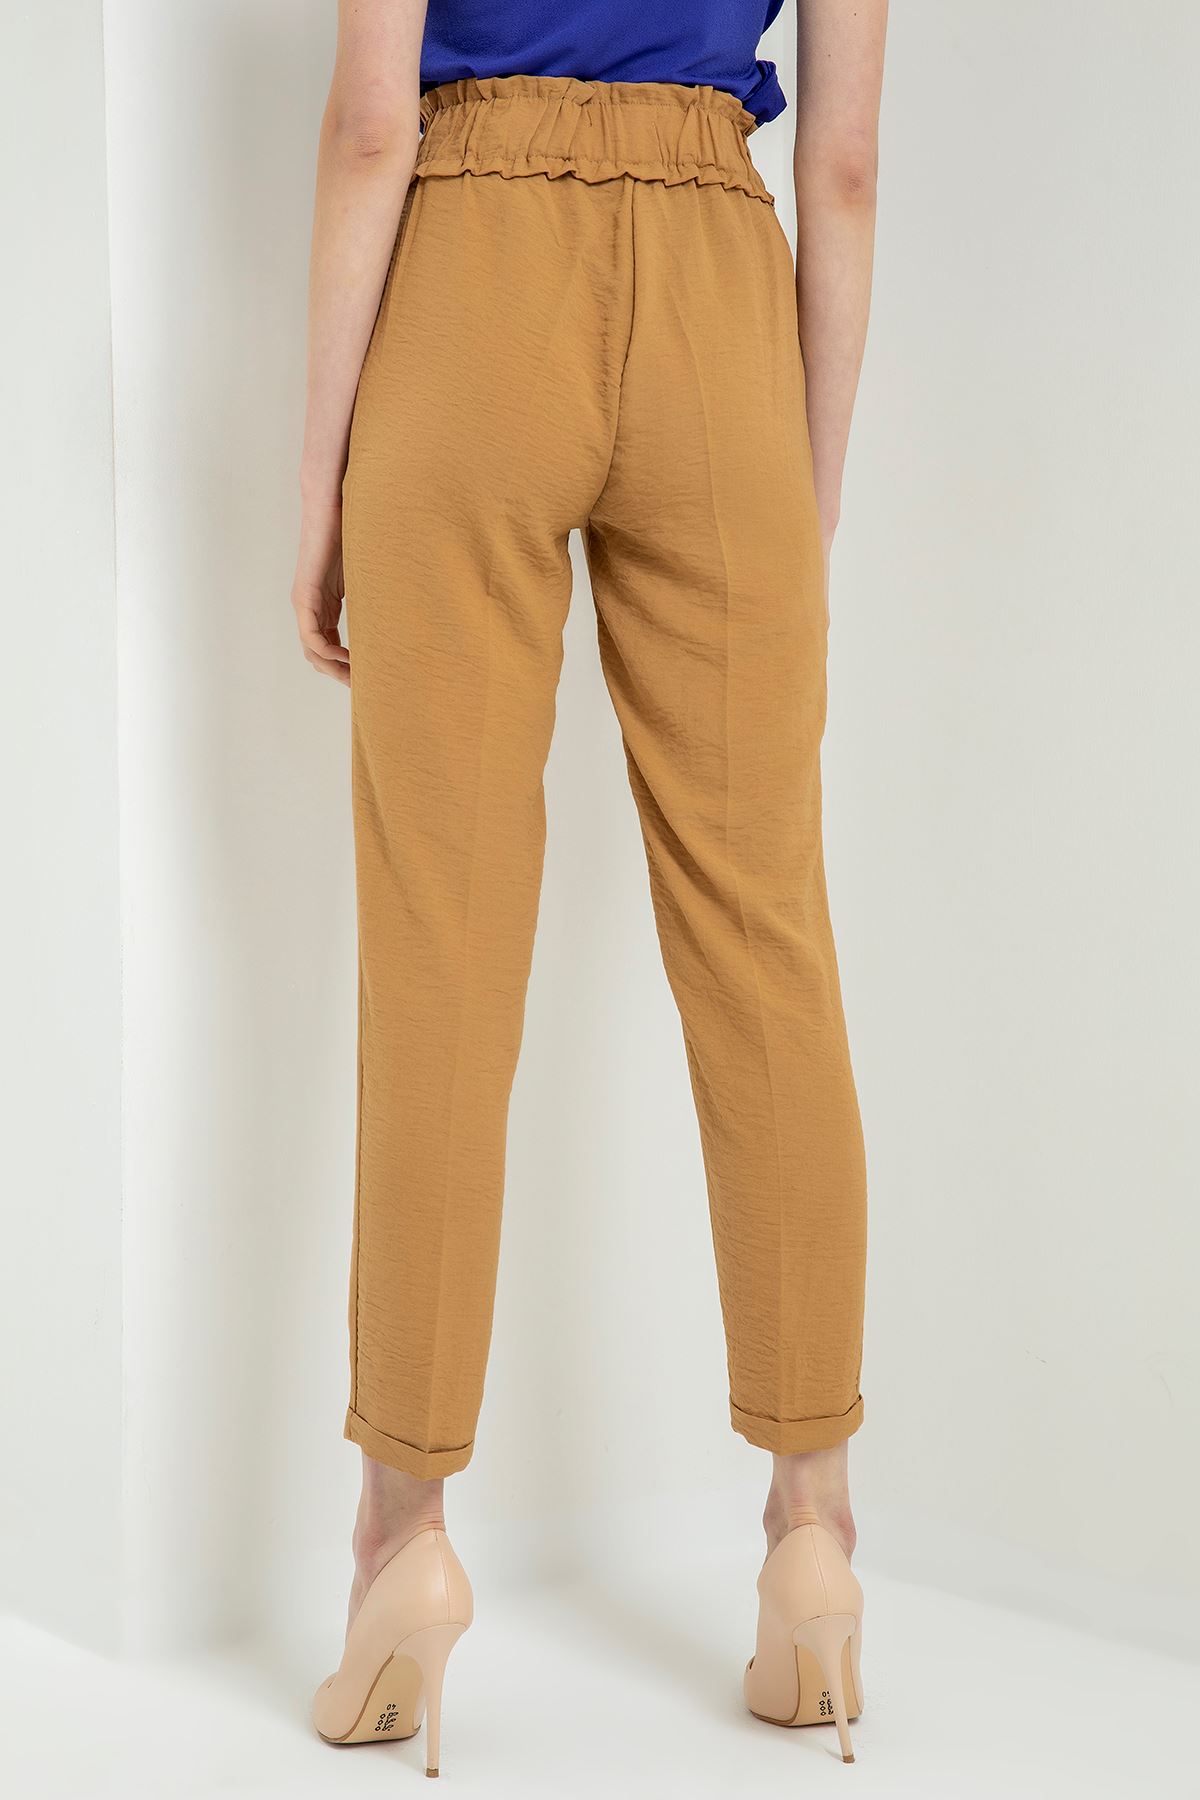 Linen Aerobin Fabric Ankle Length Wide Women'S Trouser - Light Brown